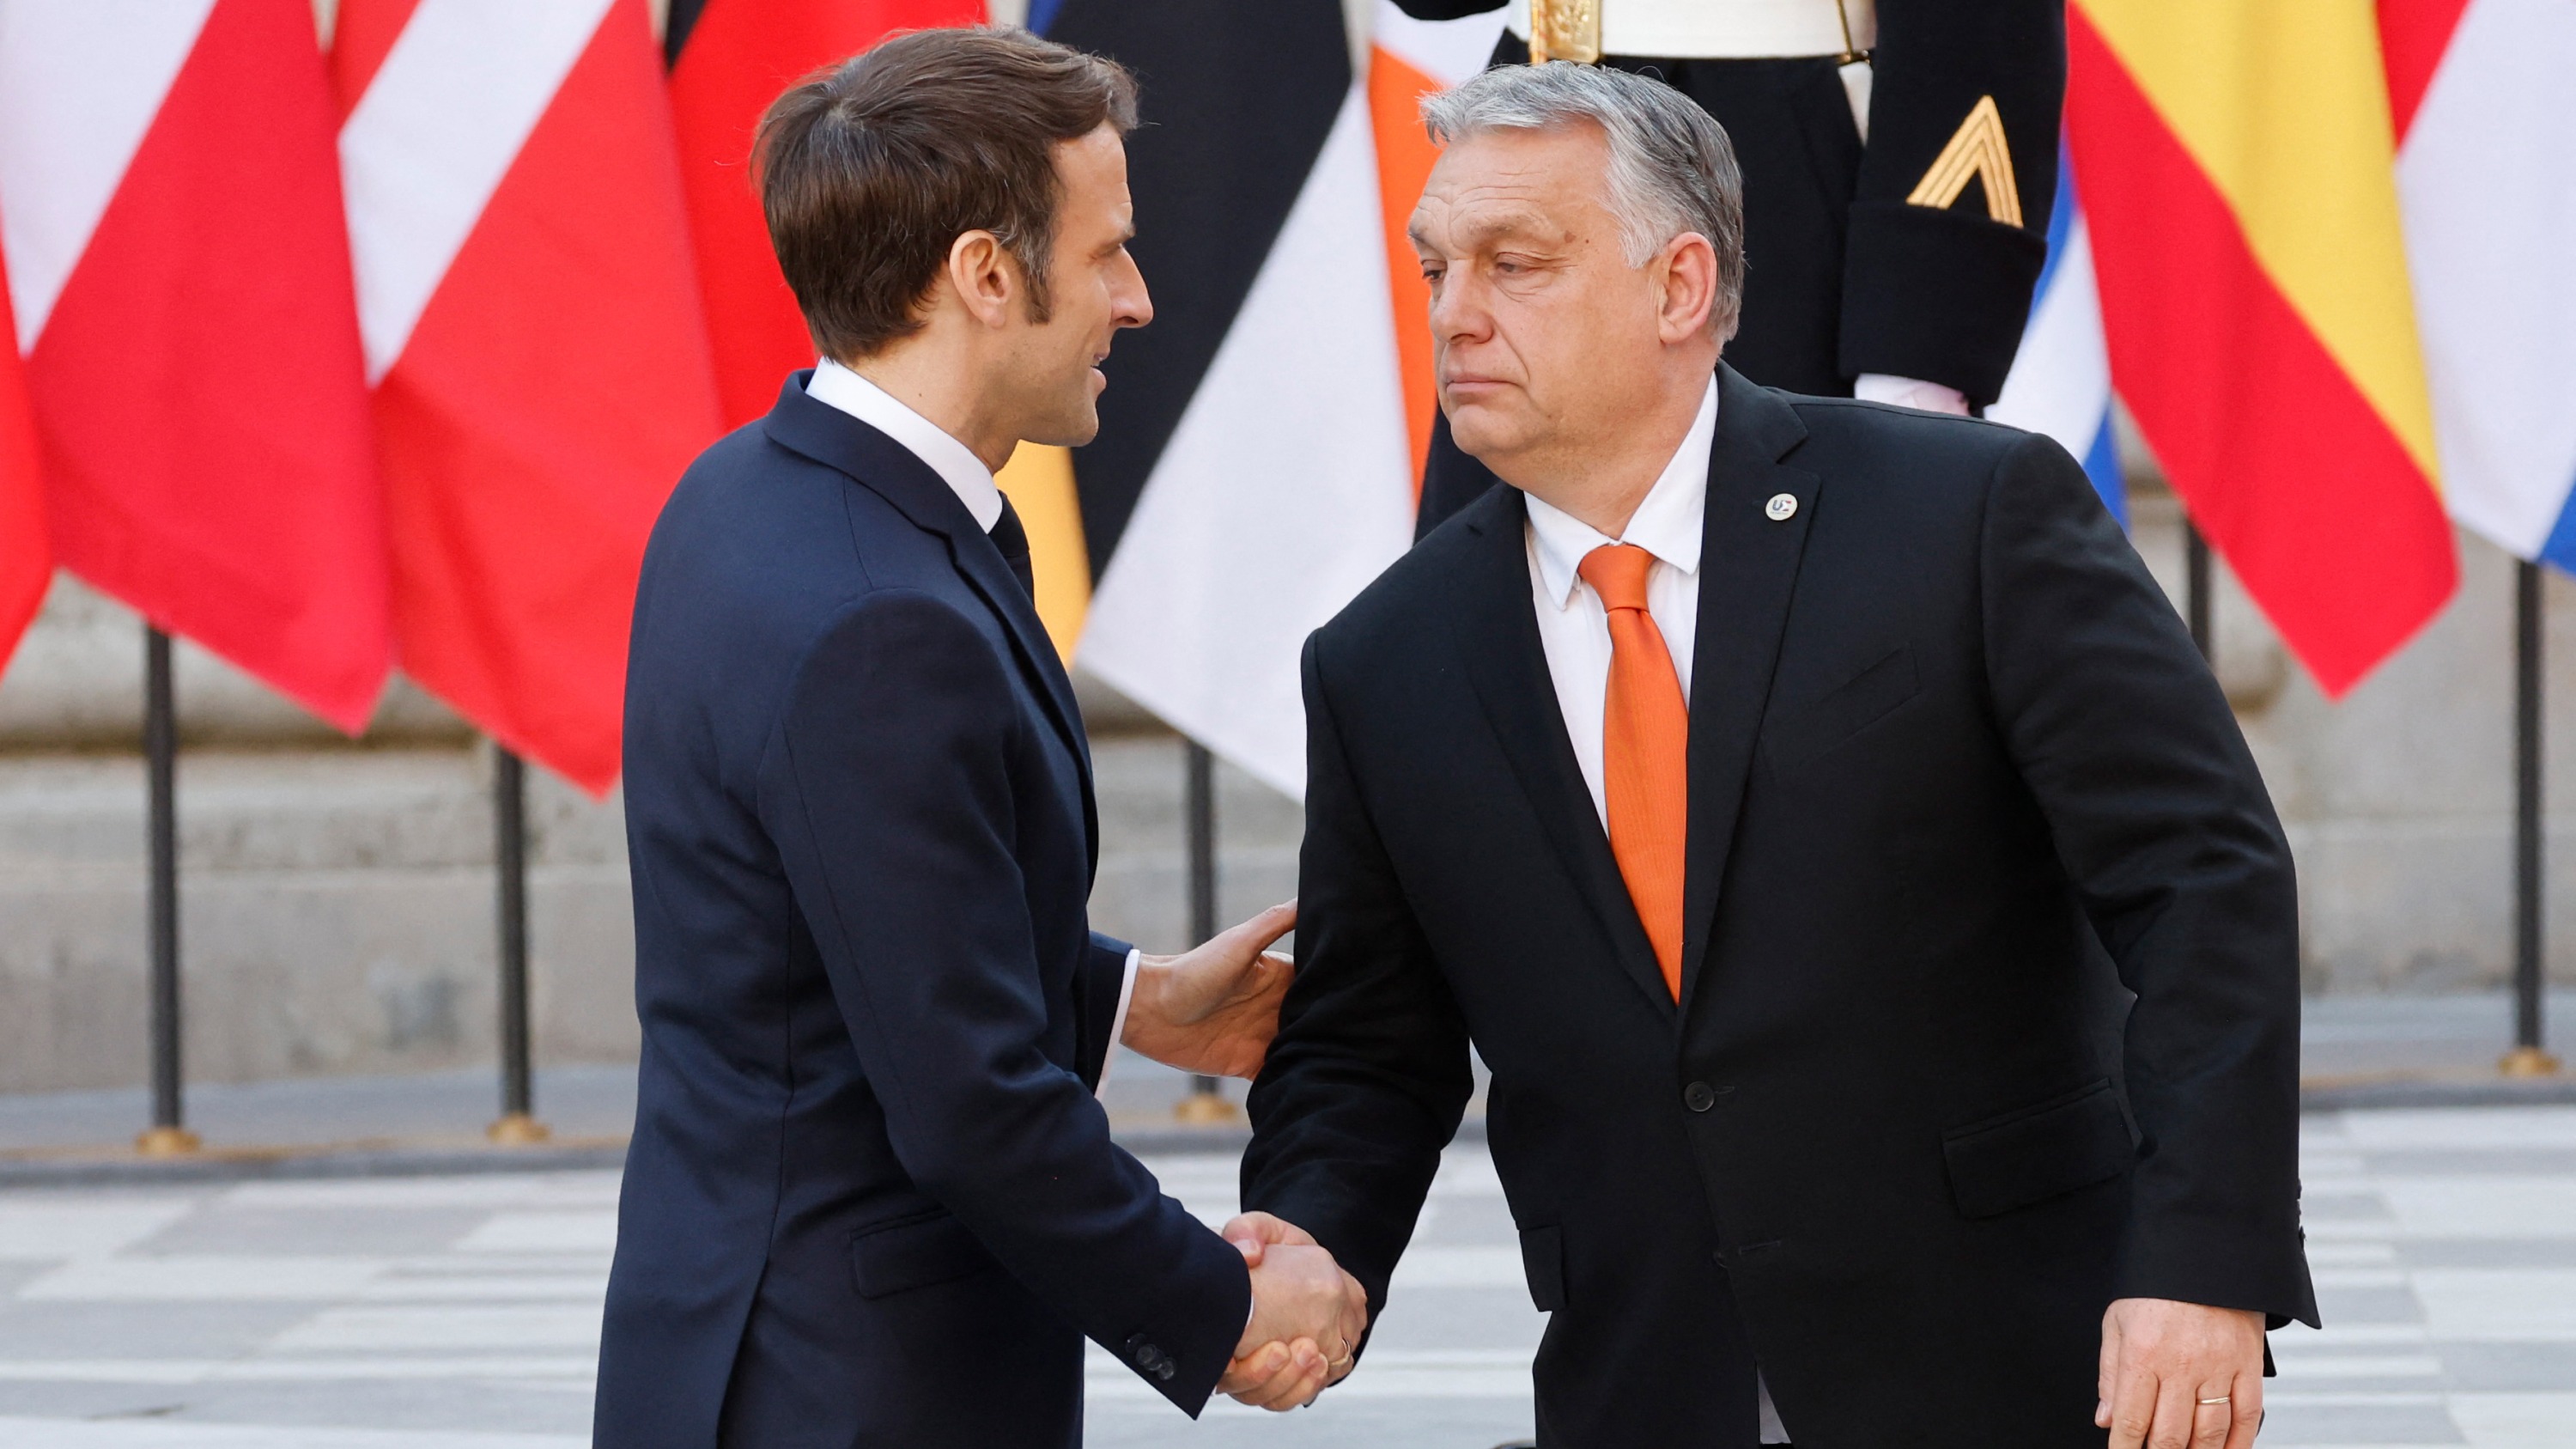 Emmanuel Macron reçoit Viktor Orban pour dîner ce lundi à l'Élysée